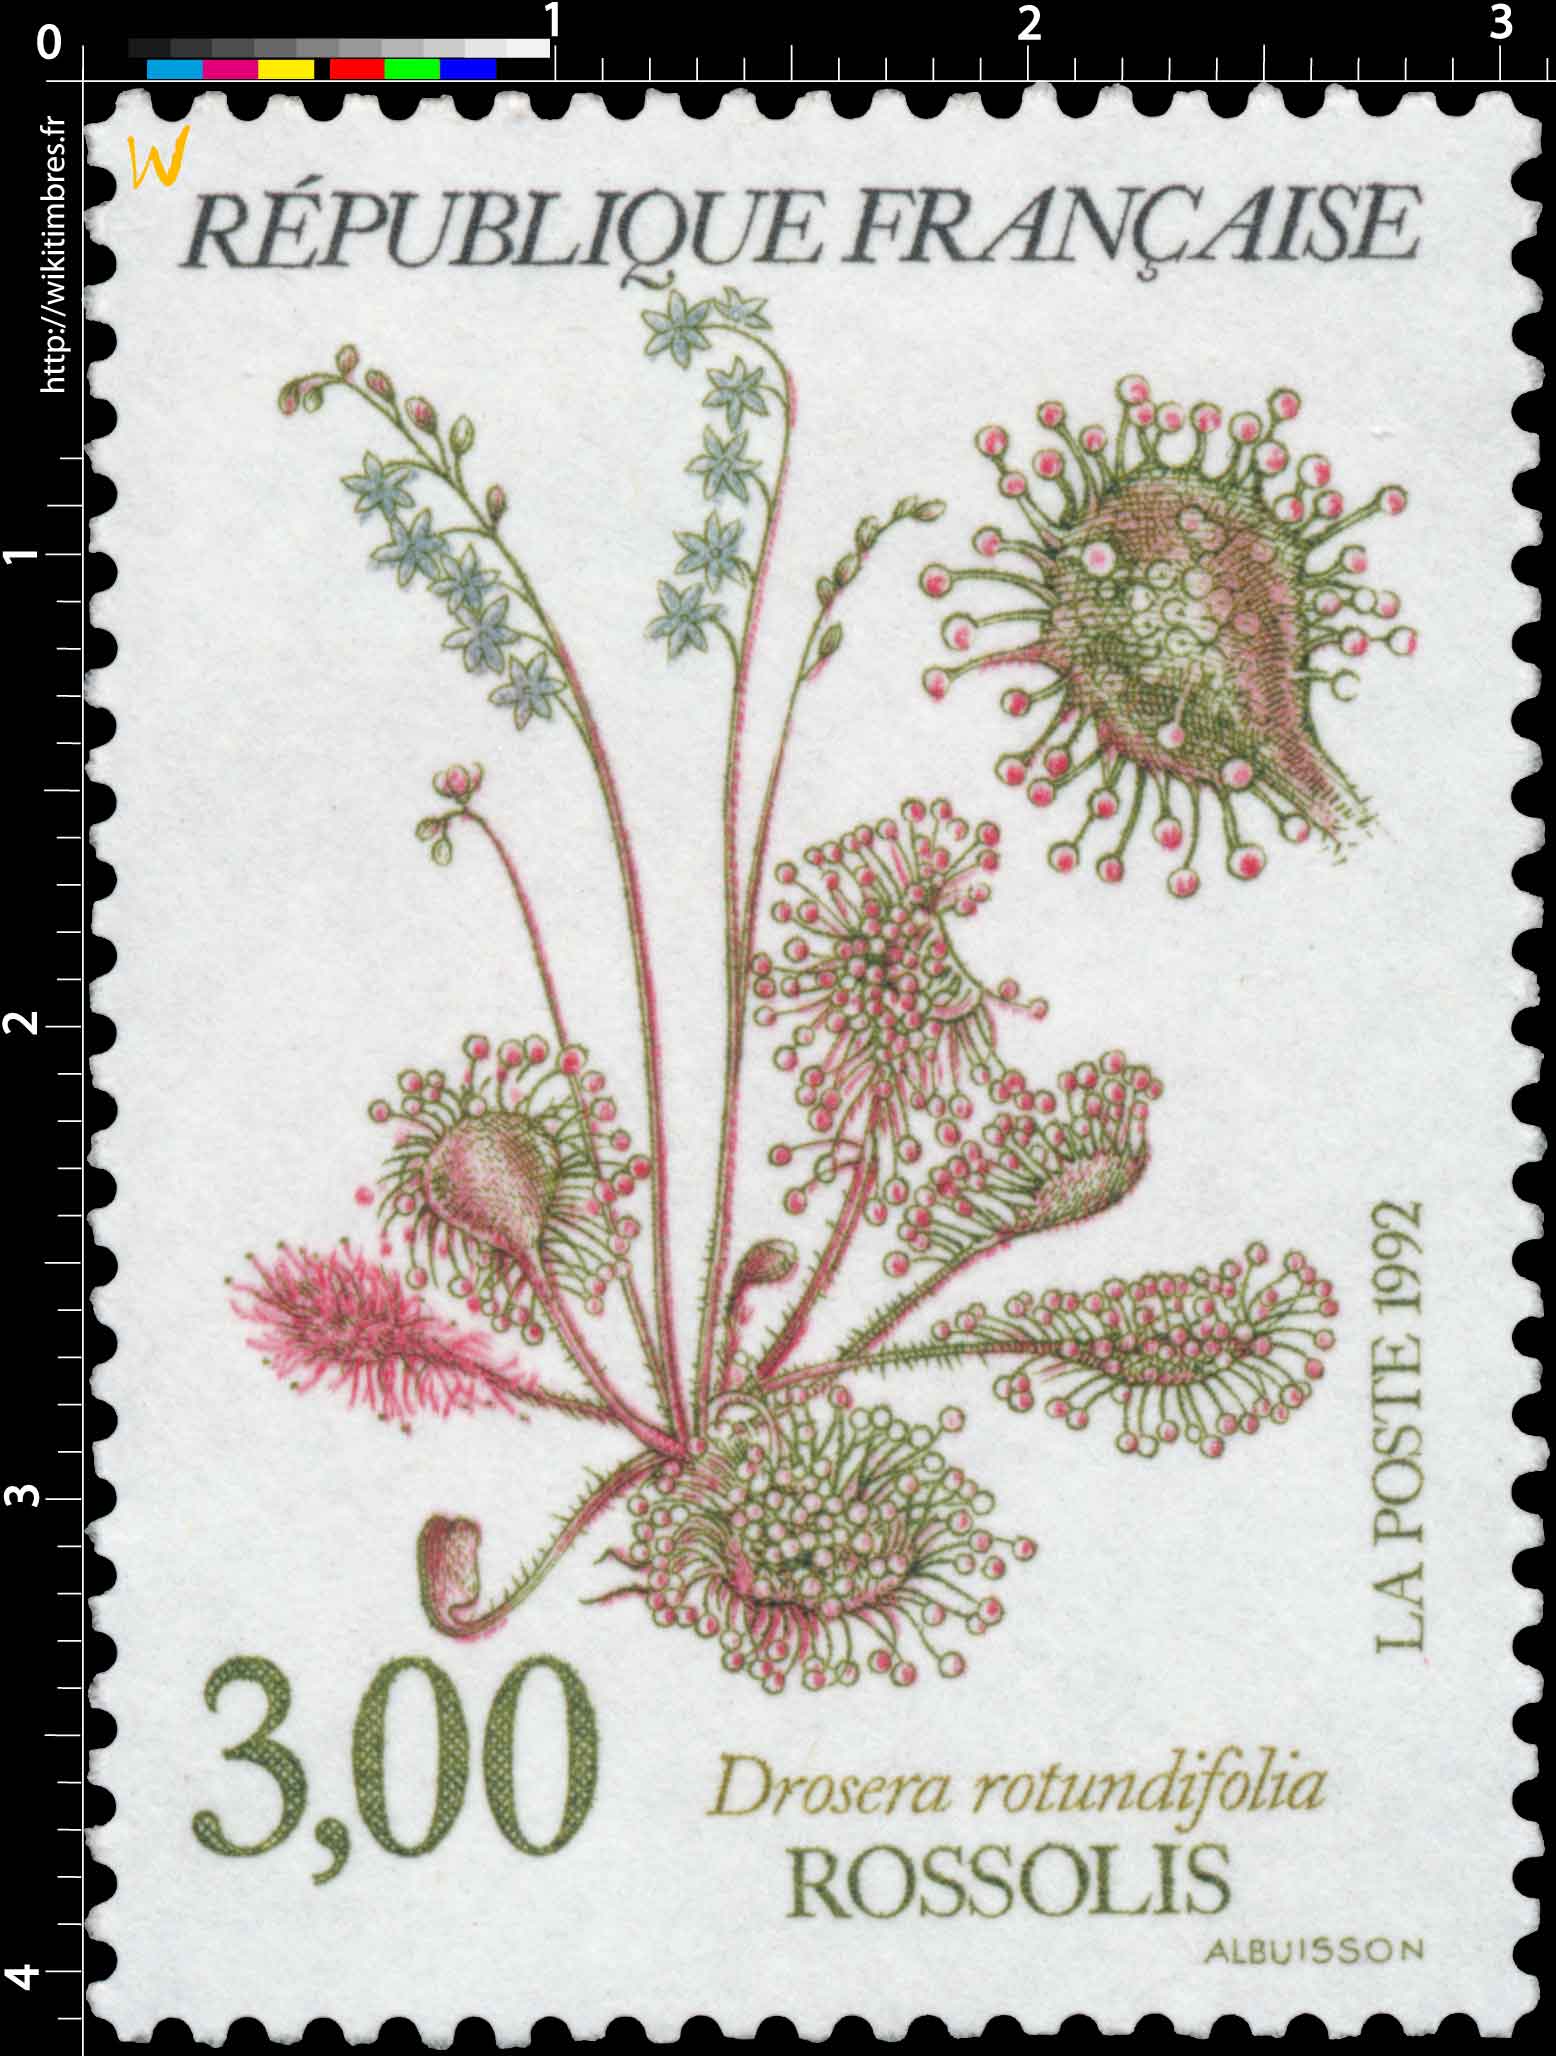 1992 ROSSOLIS Drosera rotundifolia